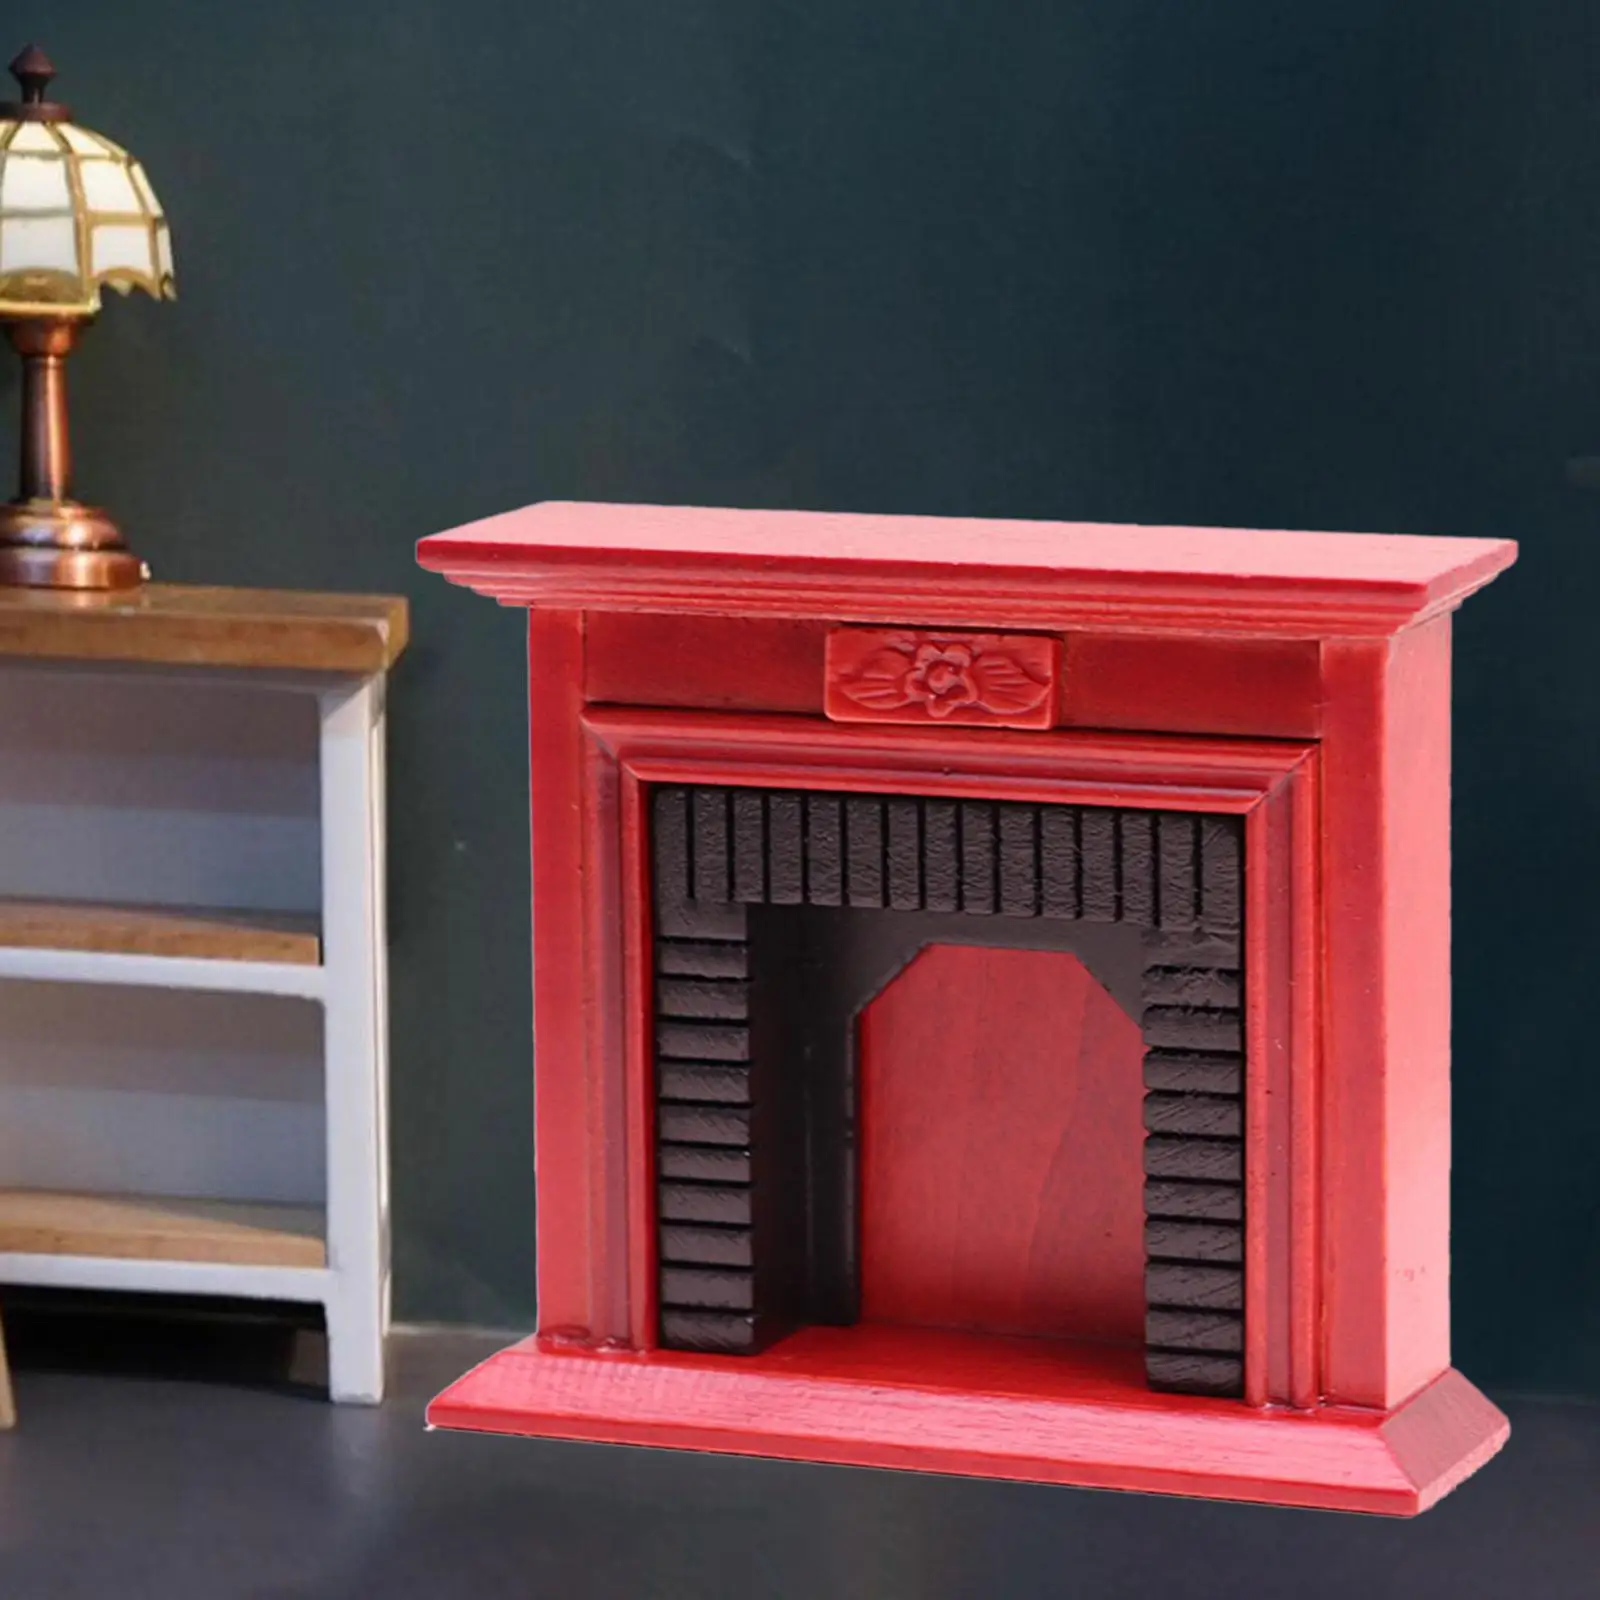 1:12 Fireplace ,DIY Scene Accessories Wooden Miniature Dollhouse Decoration